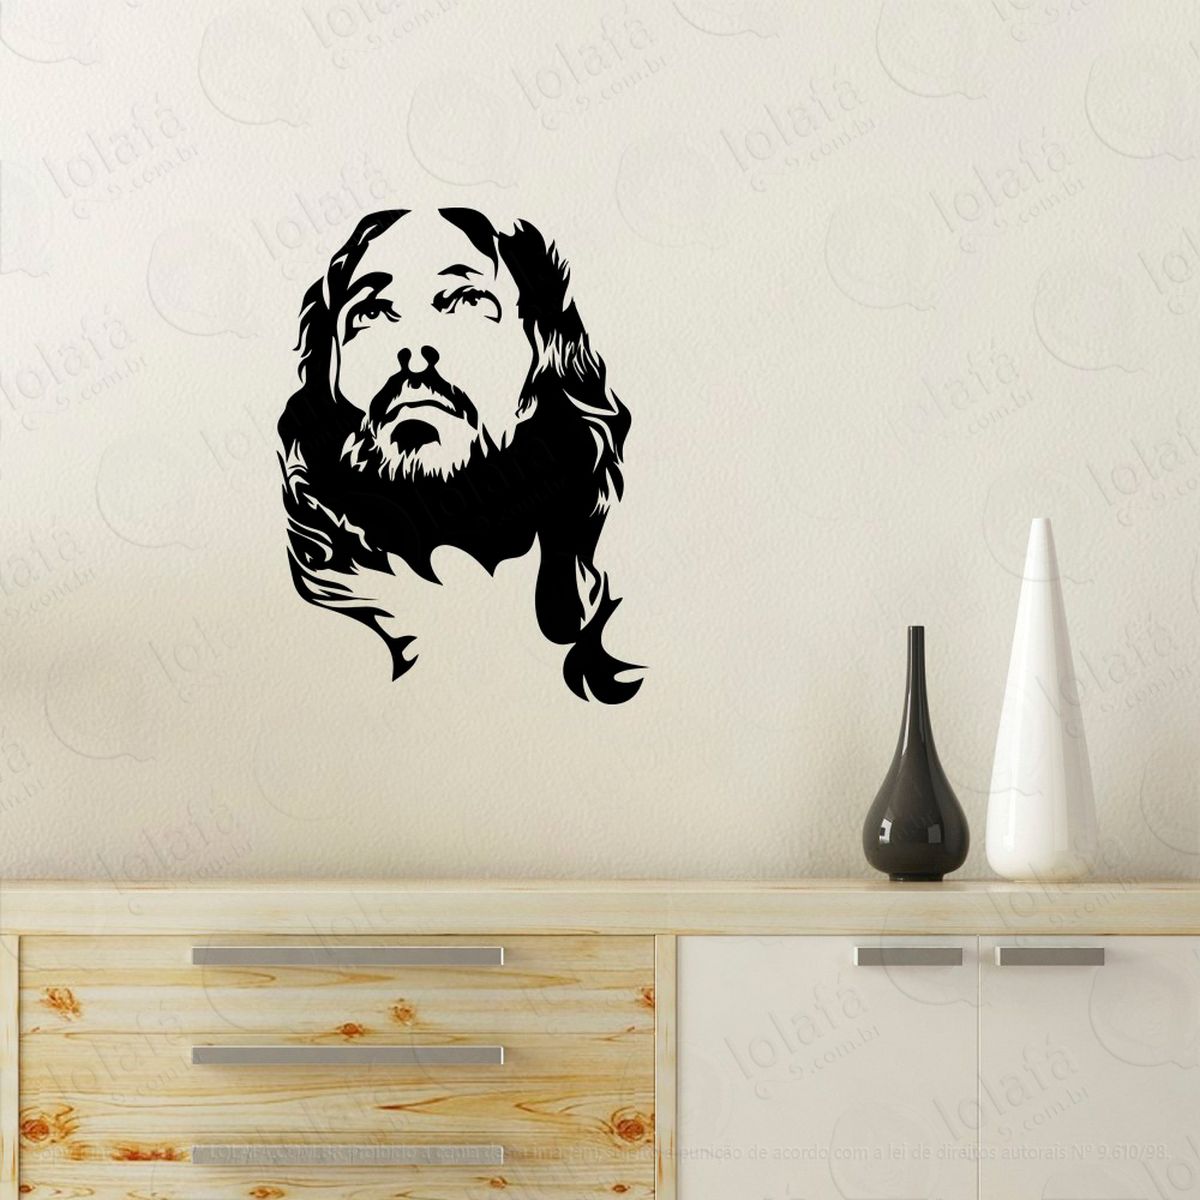 jesus cristo adesivo de parede decorativo para casa, quarto, sala e vidro - mod:8